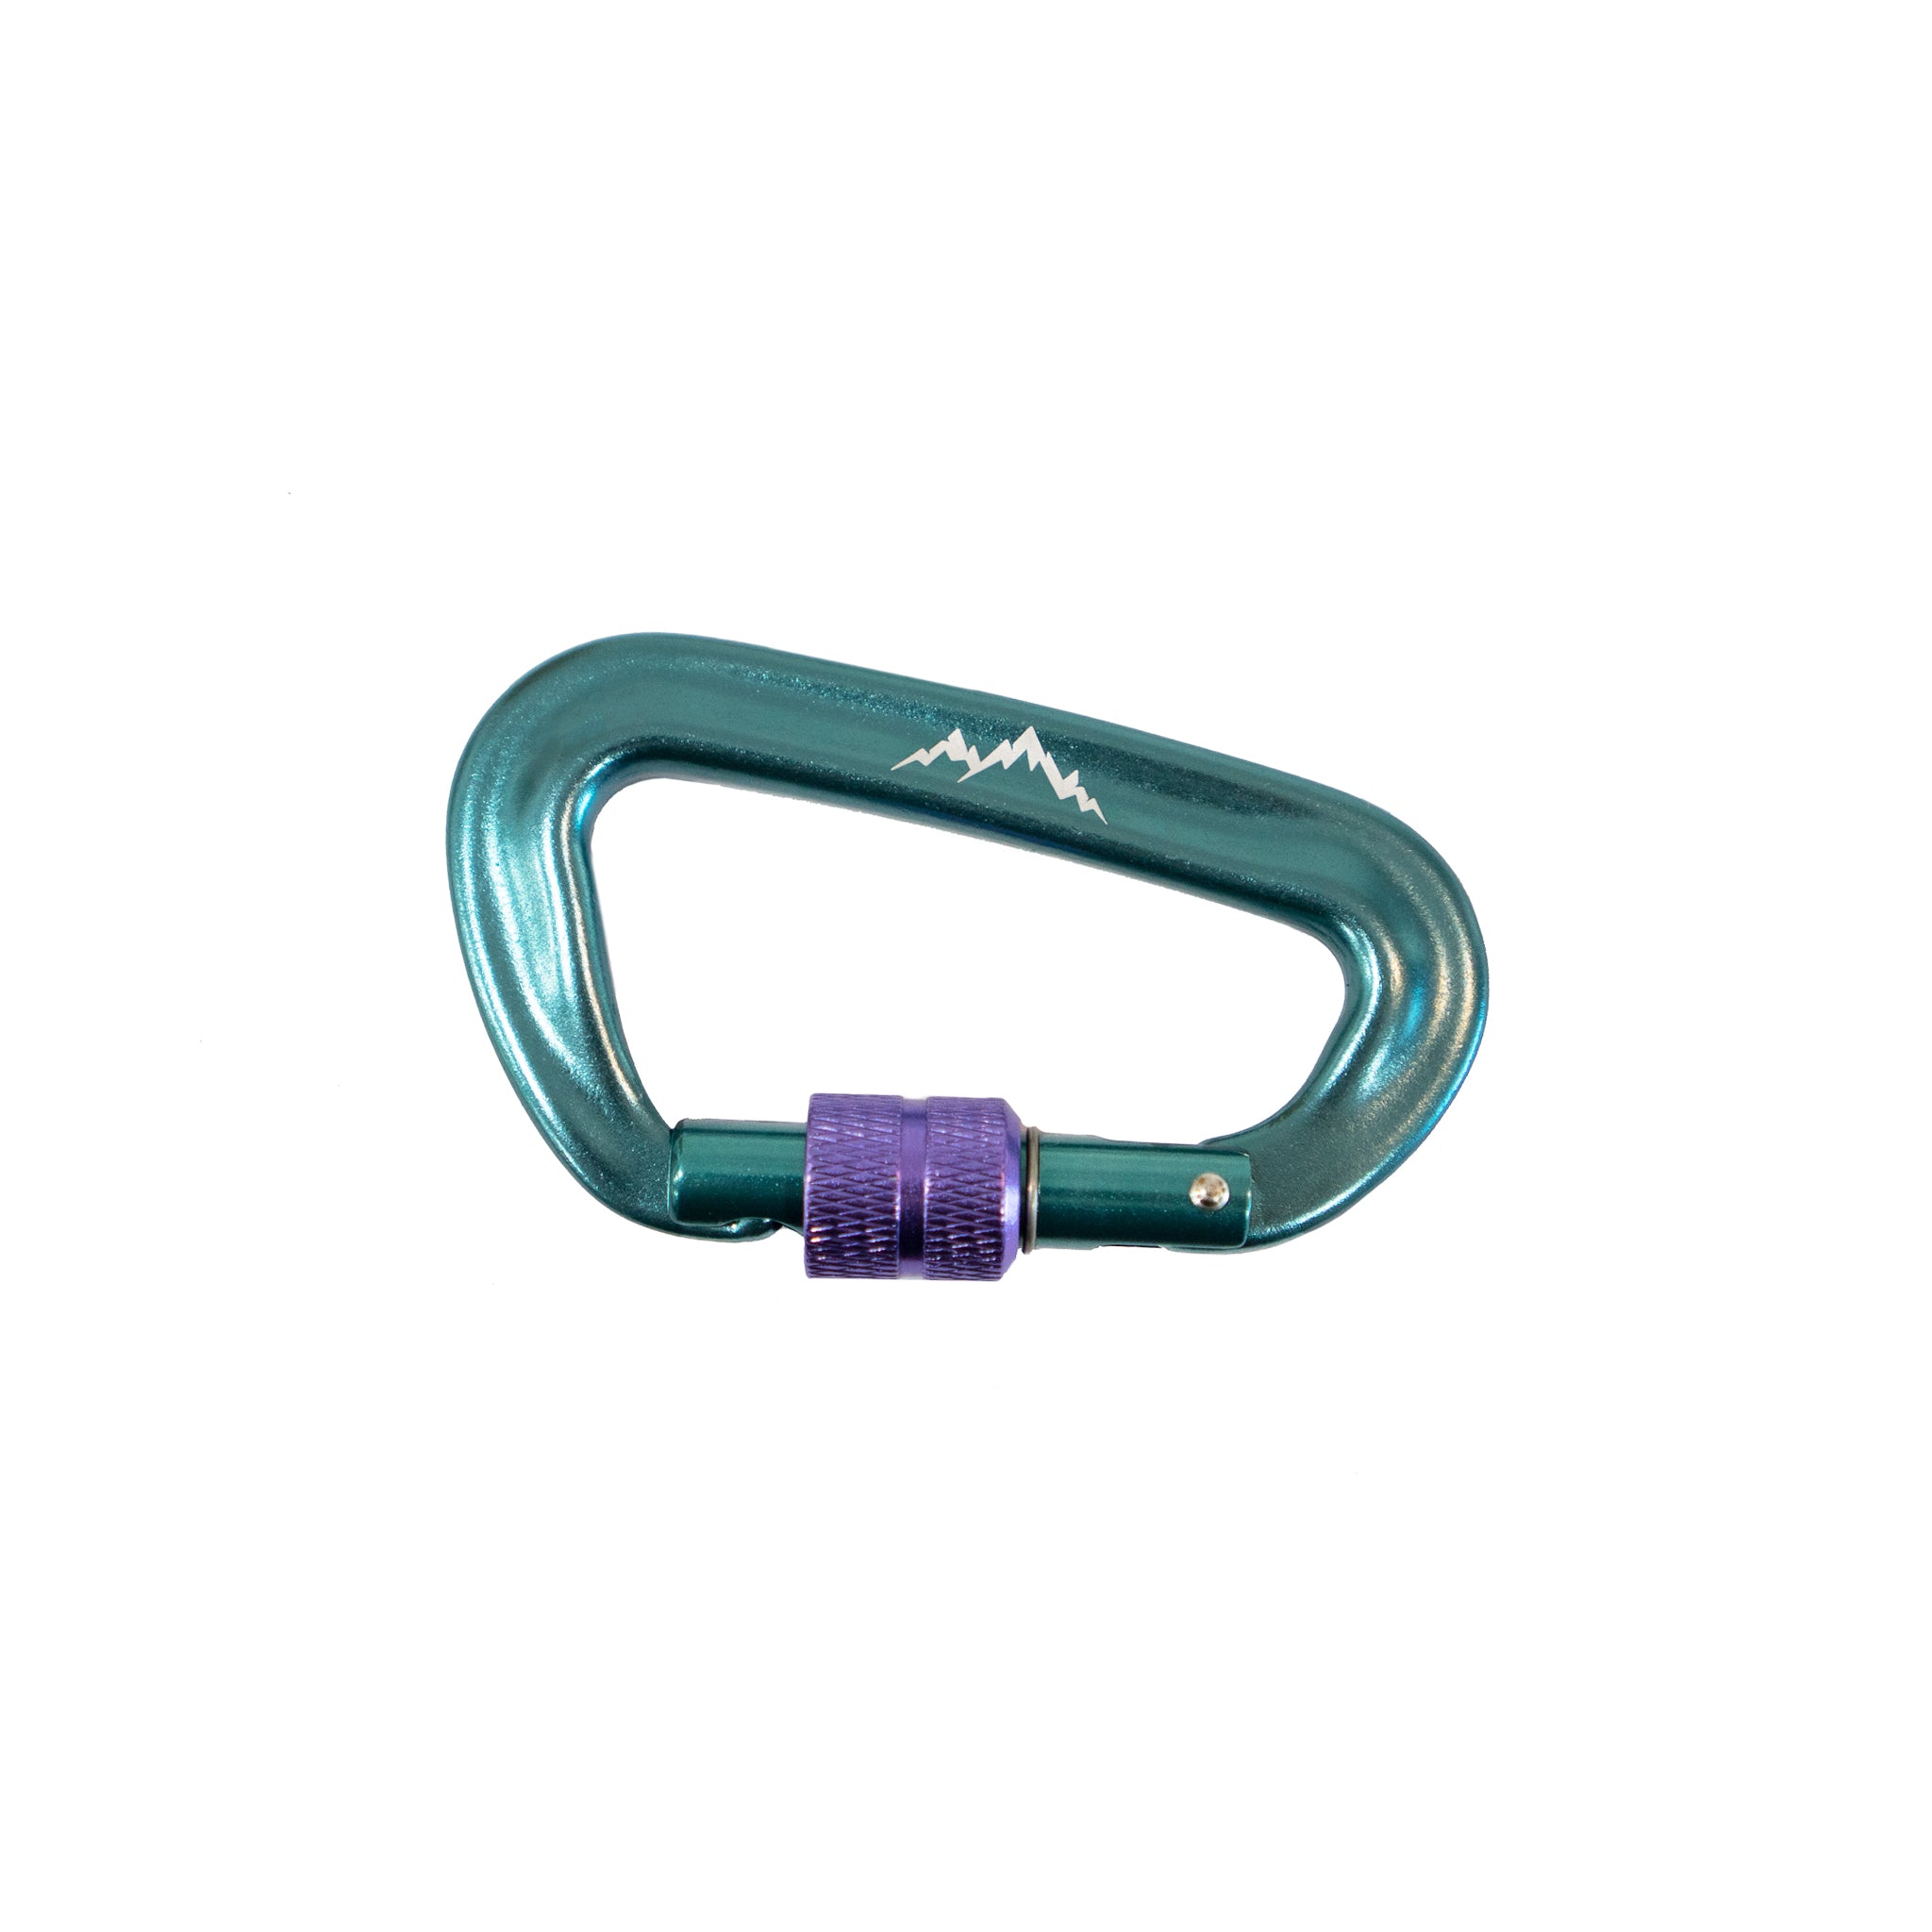 Teal / Purple Carabiner